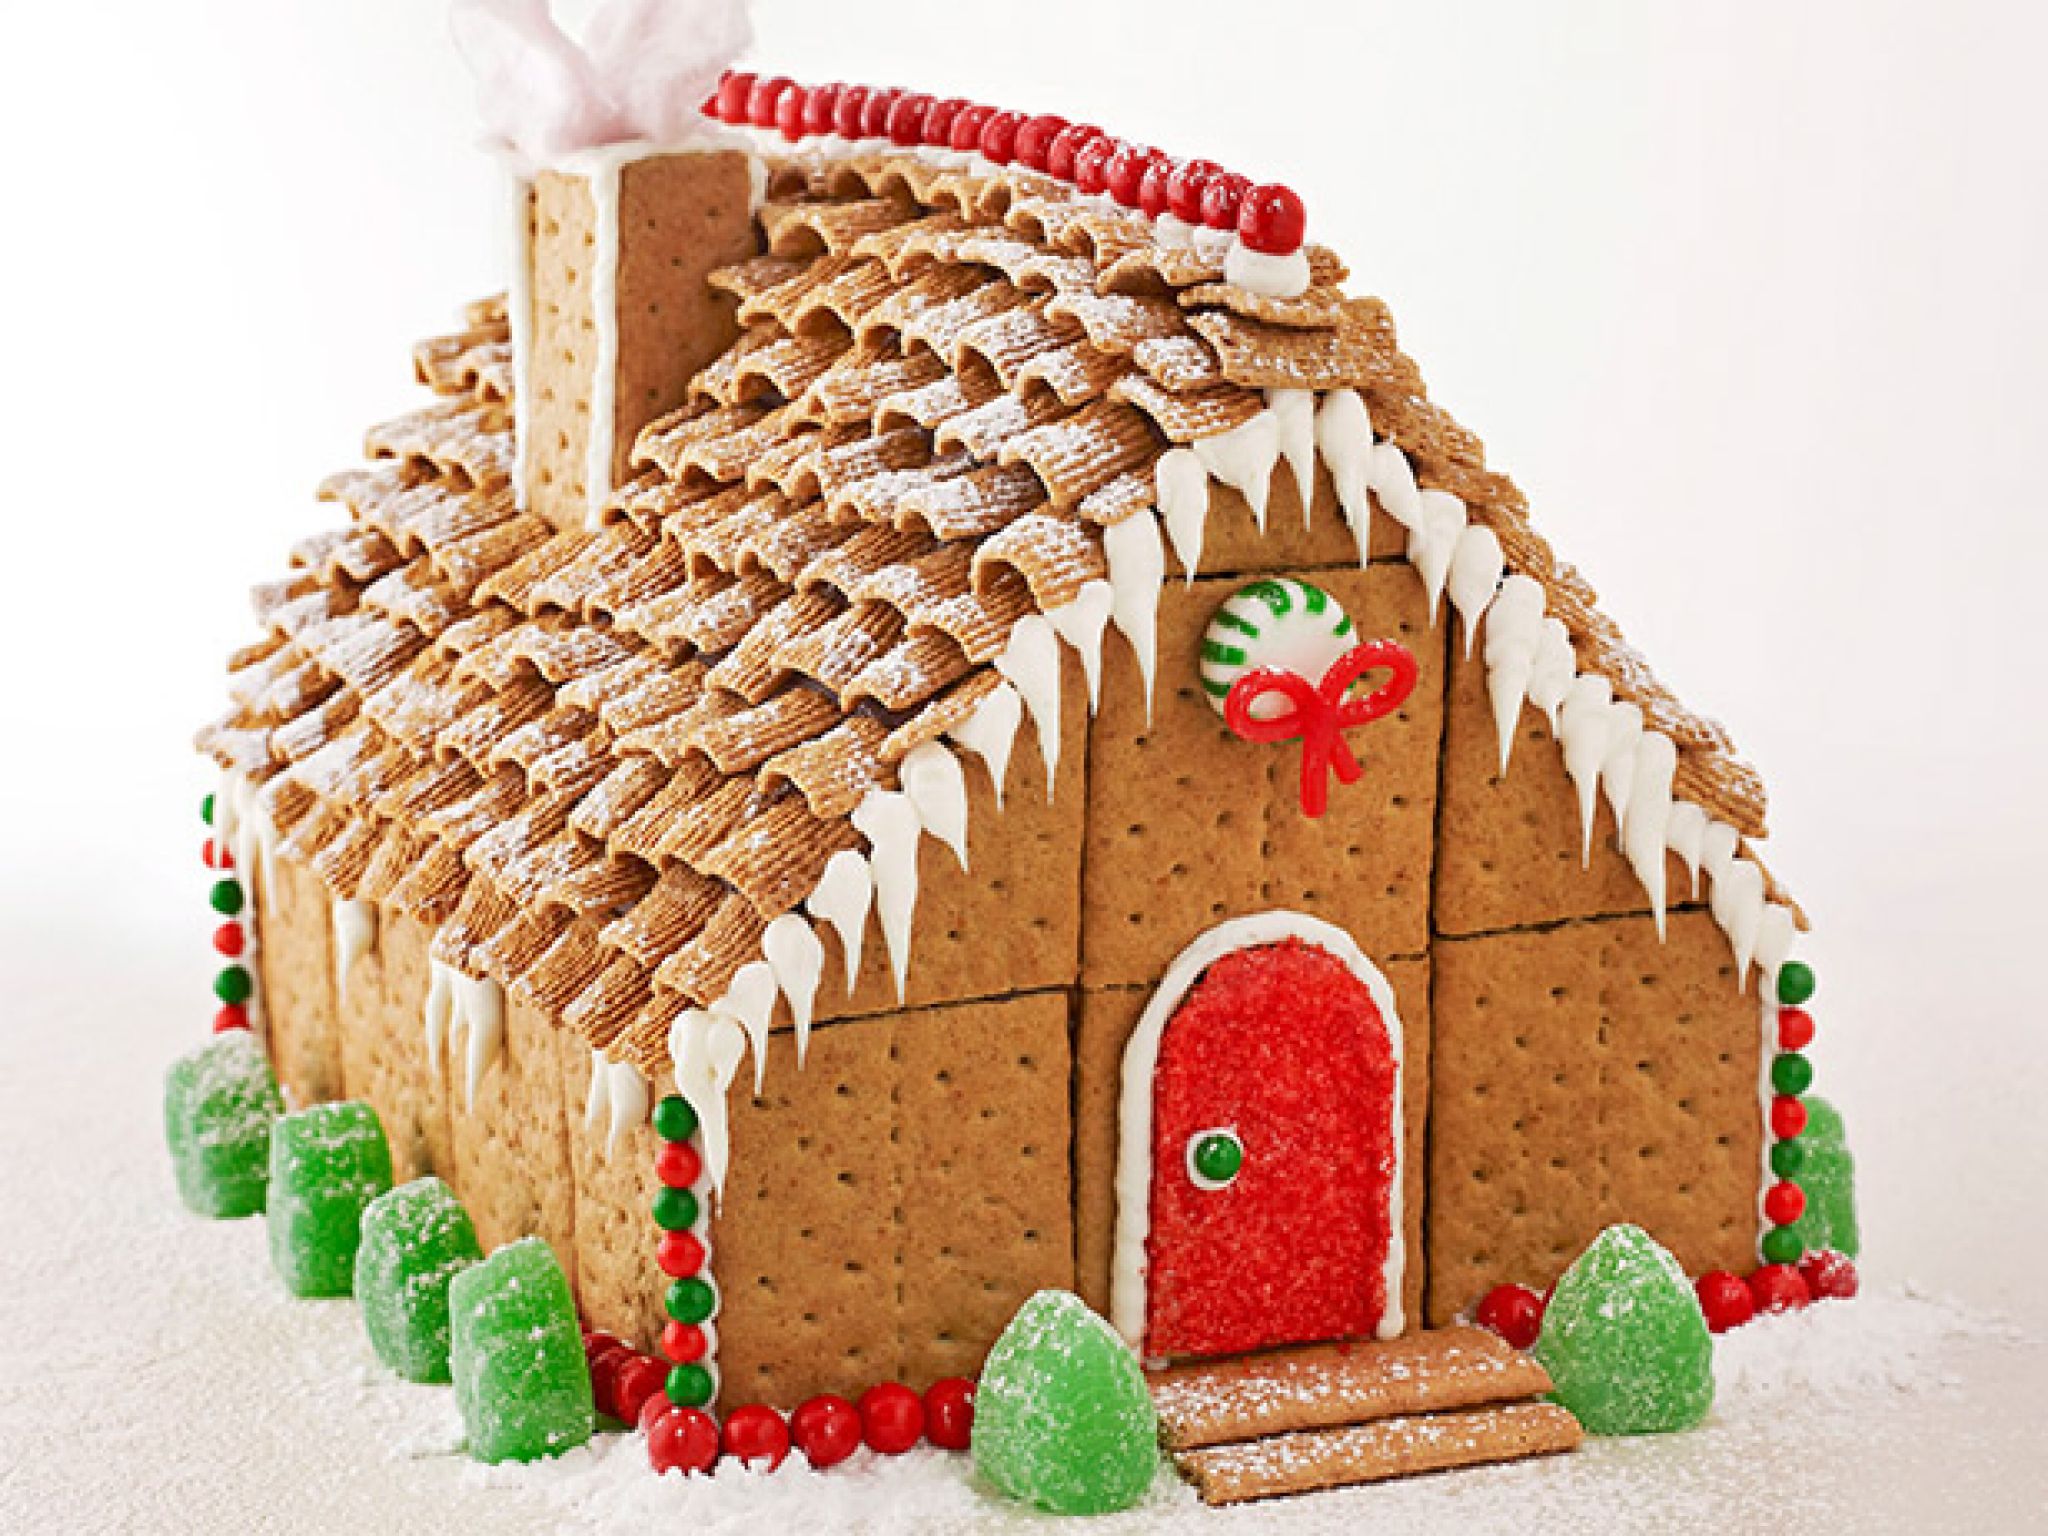 fnm 120113 gingerbread house cake recipe s4x3.jpg.rend.sniipadlarge